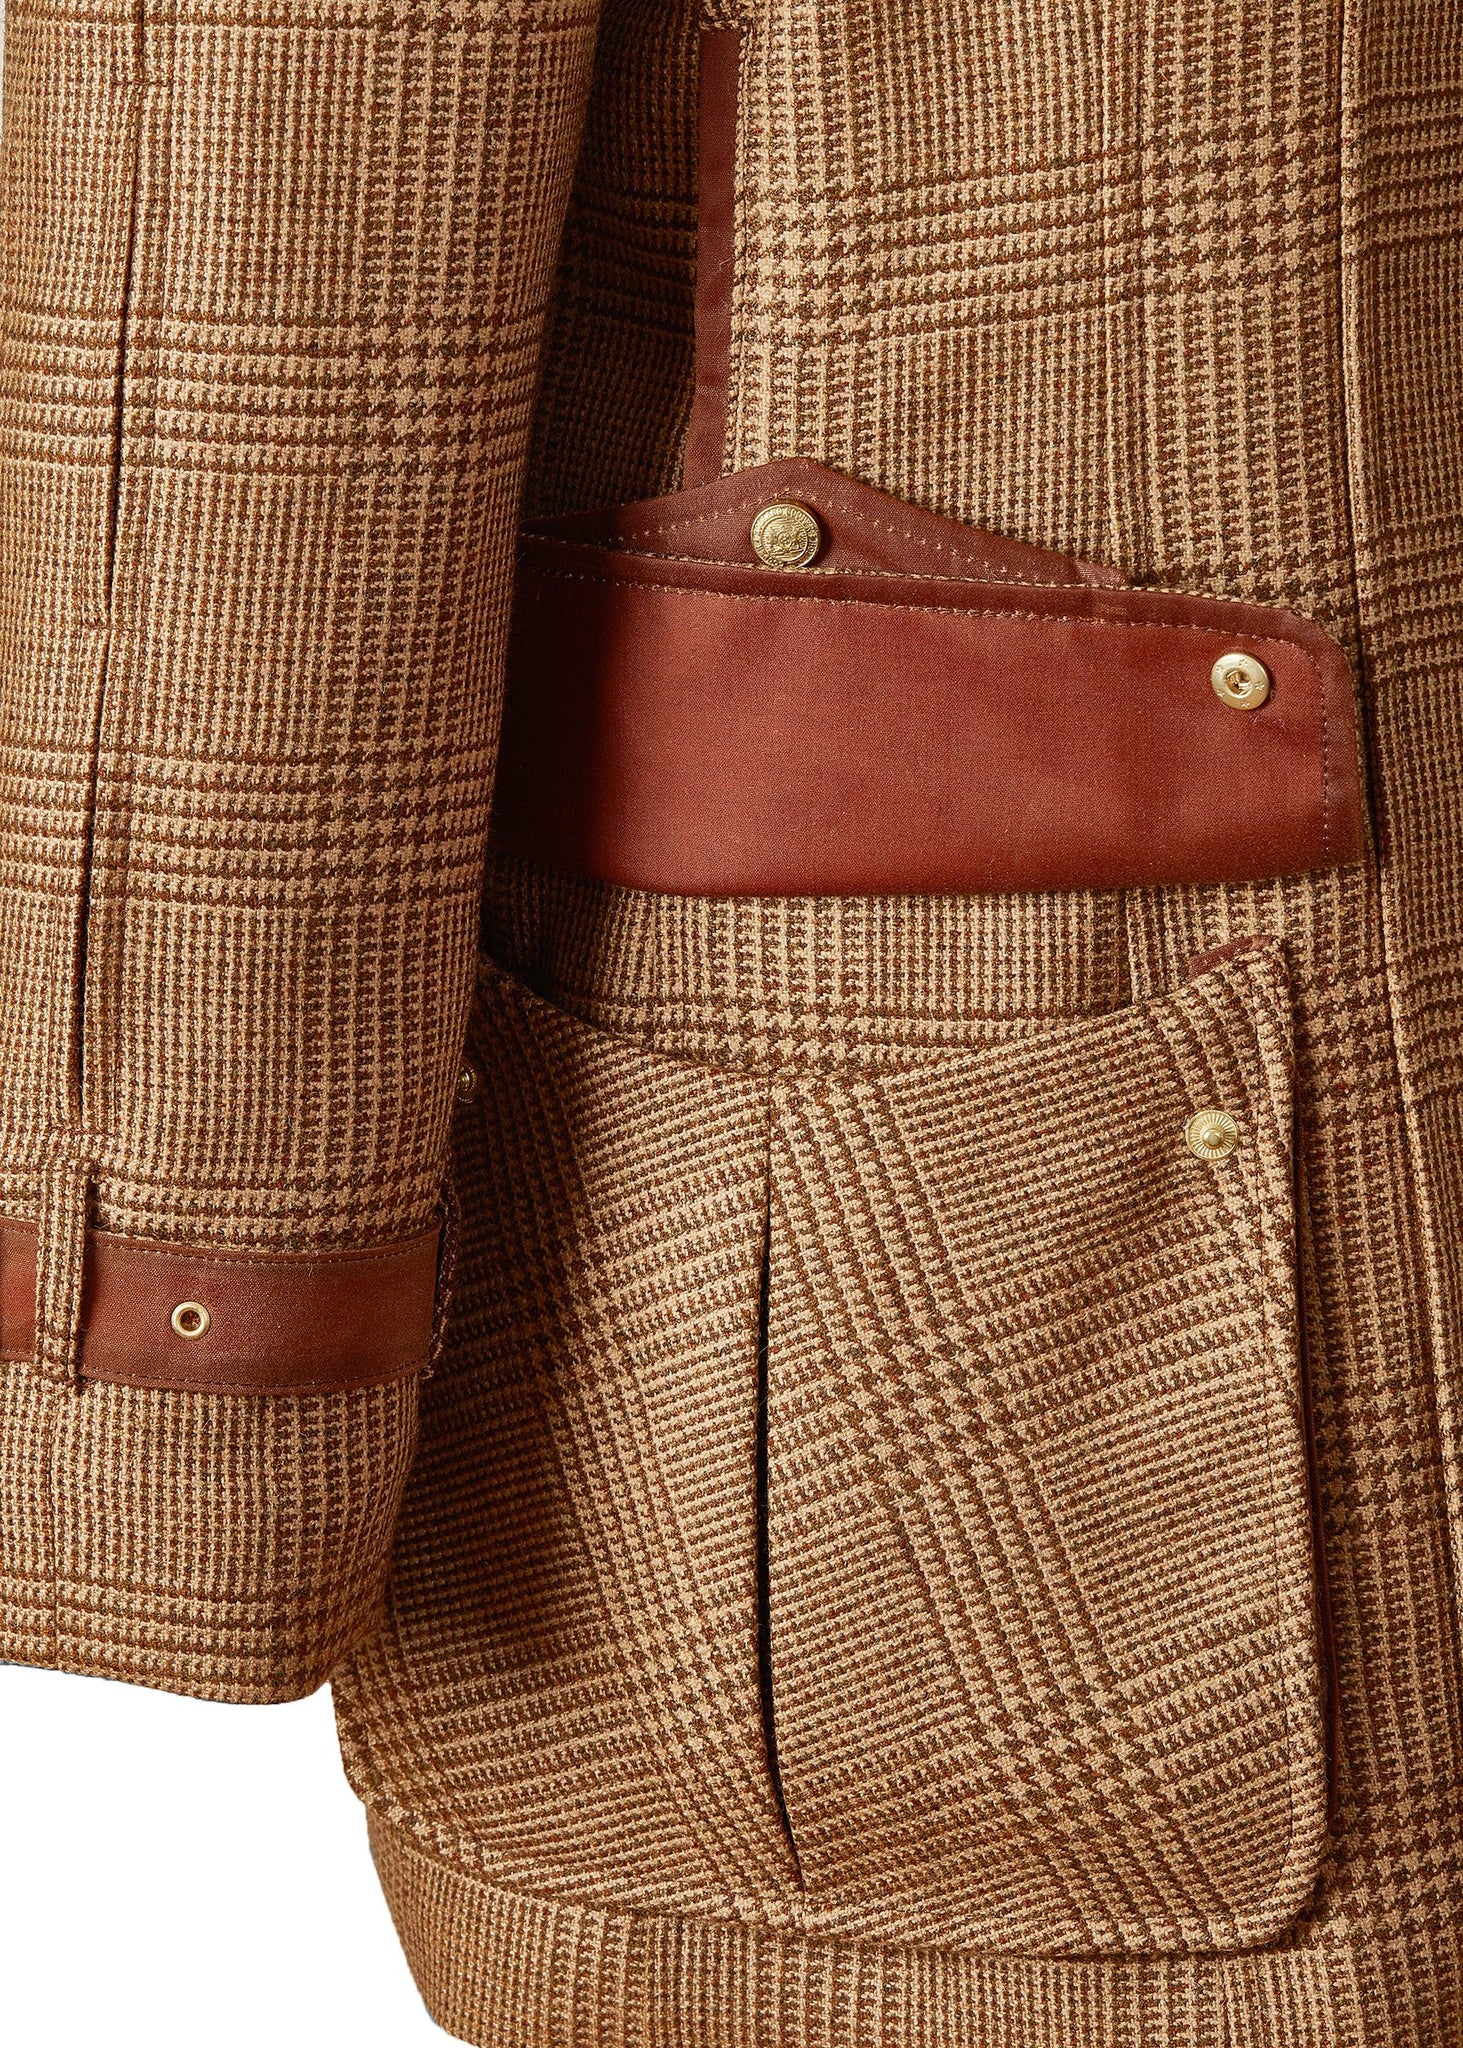 Open pocket of tan brown tartan tweed field coat